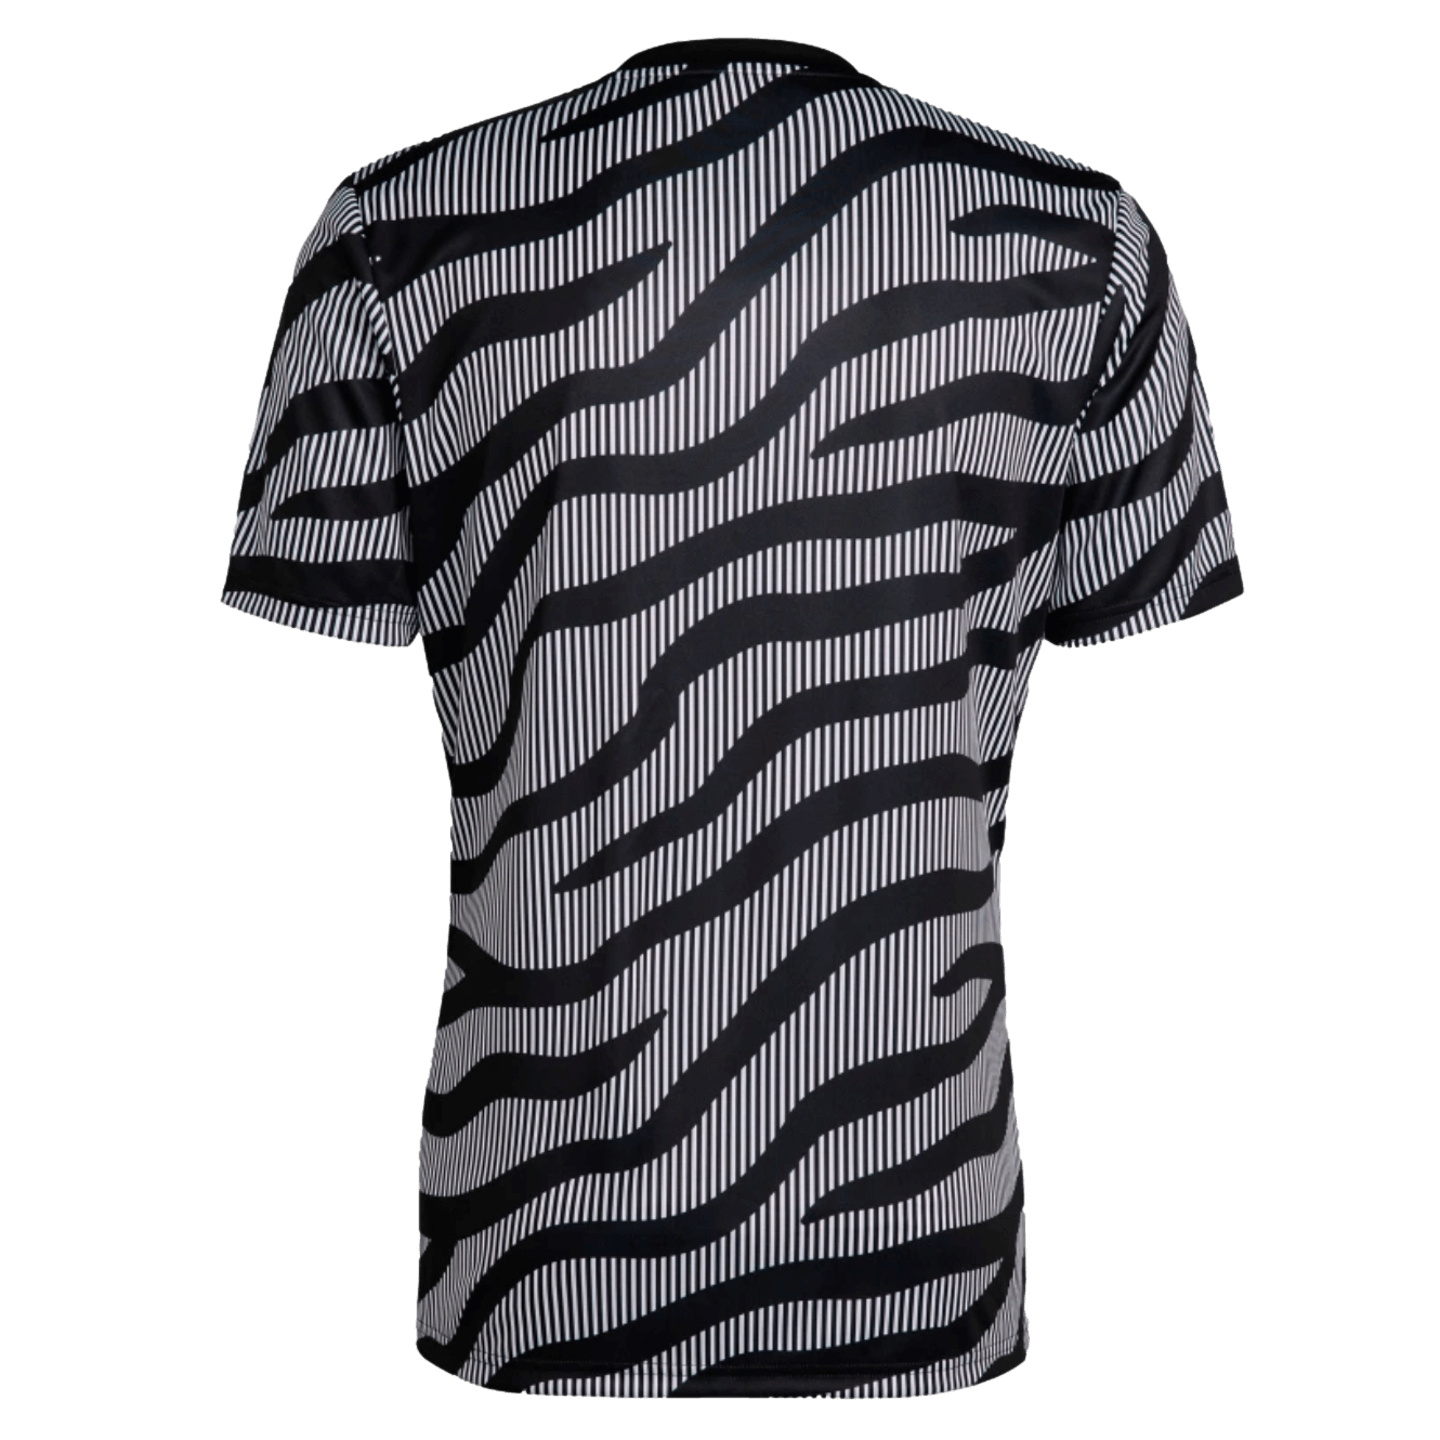 Adidas Juventus Pre-Match Jersey